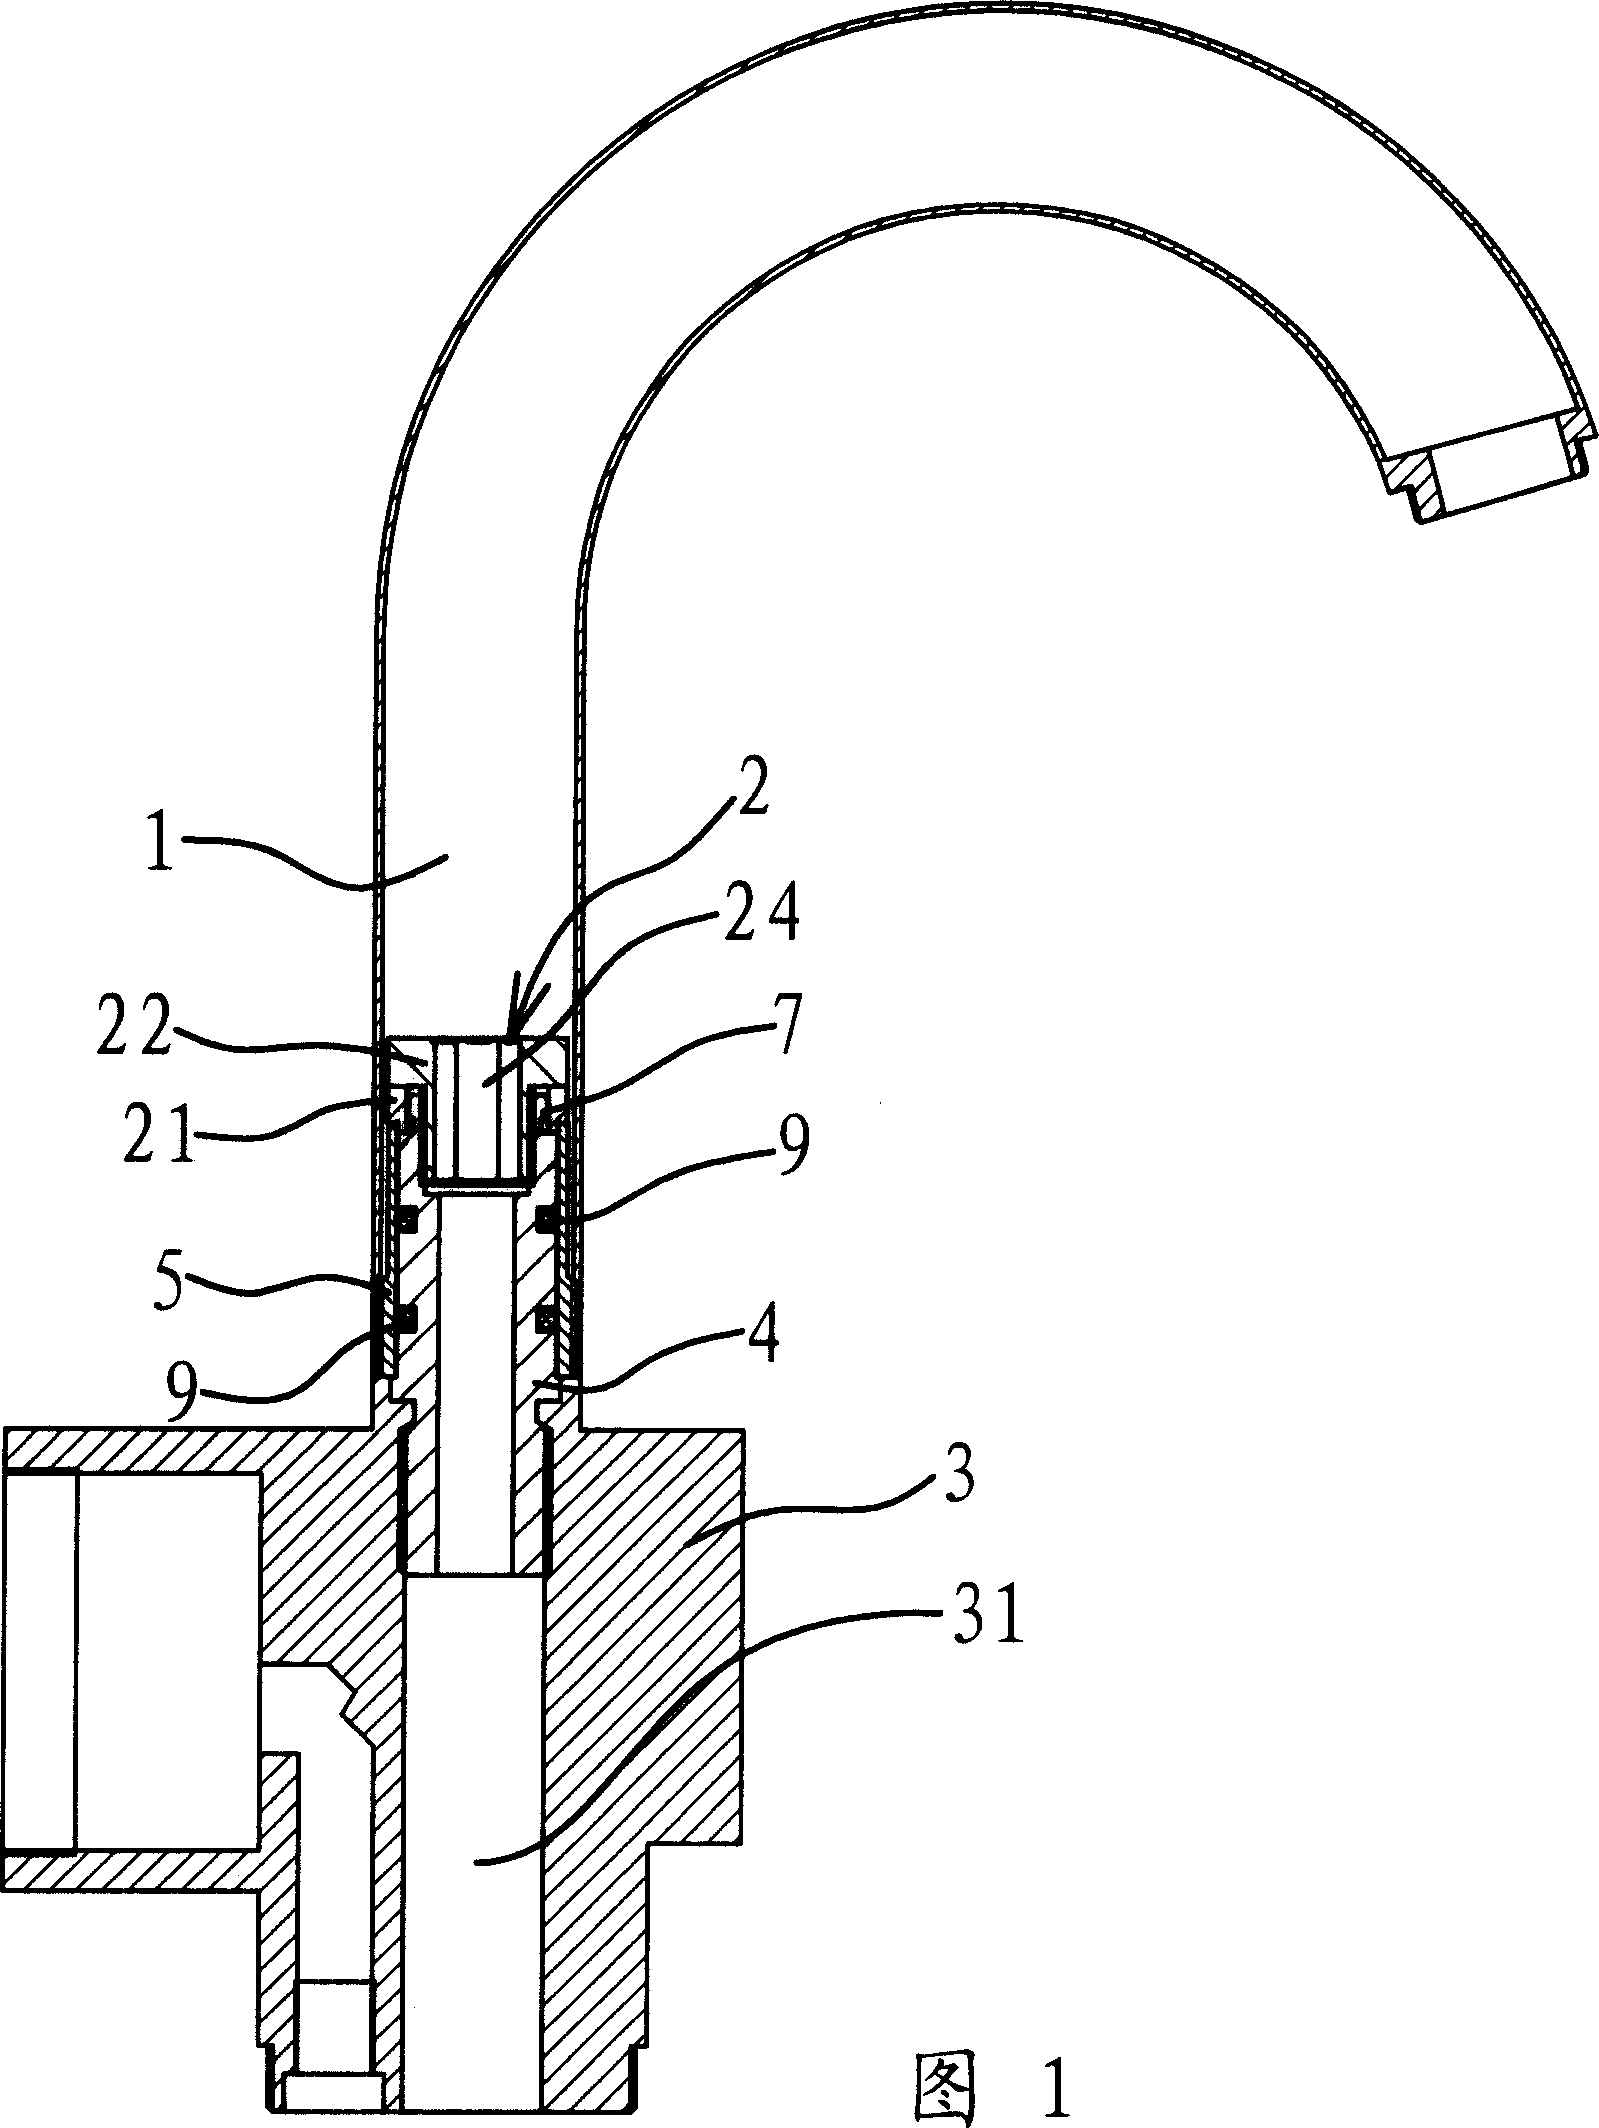 Watertap discharging tube connecting device